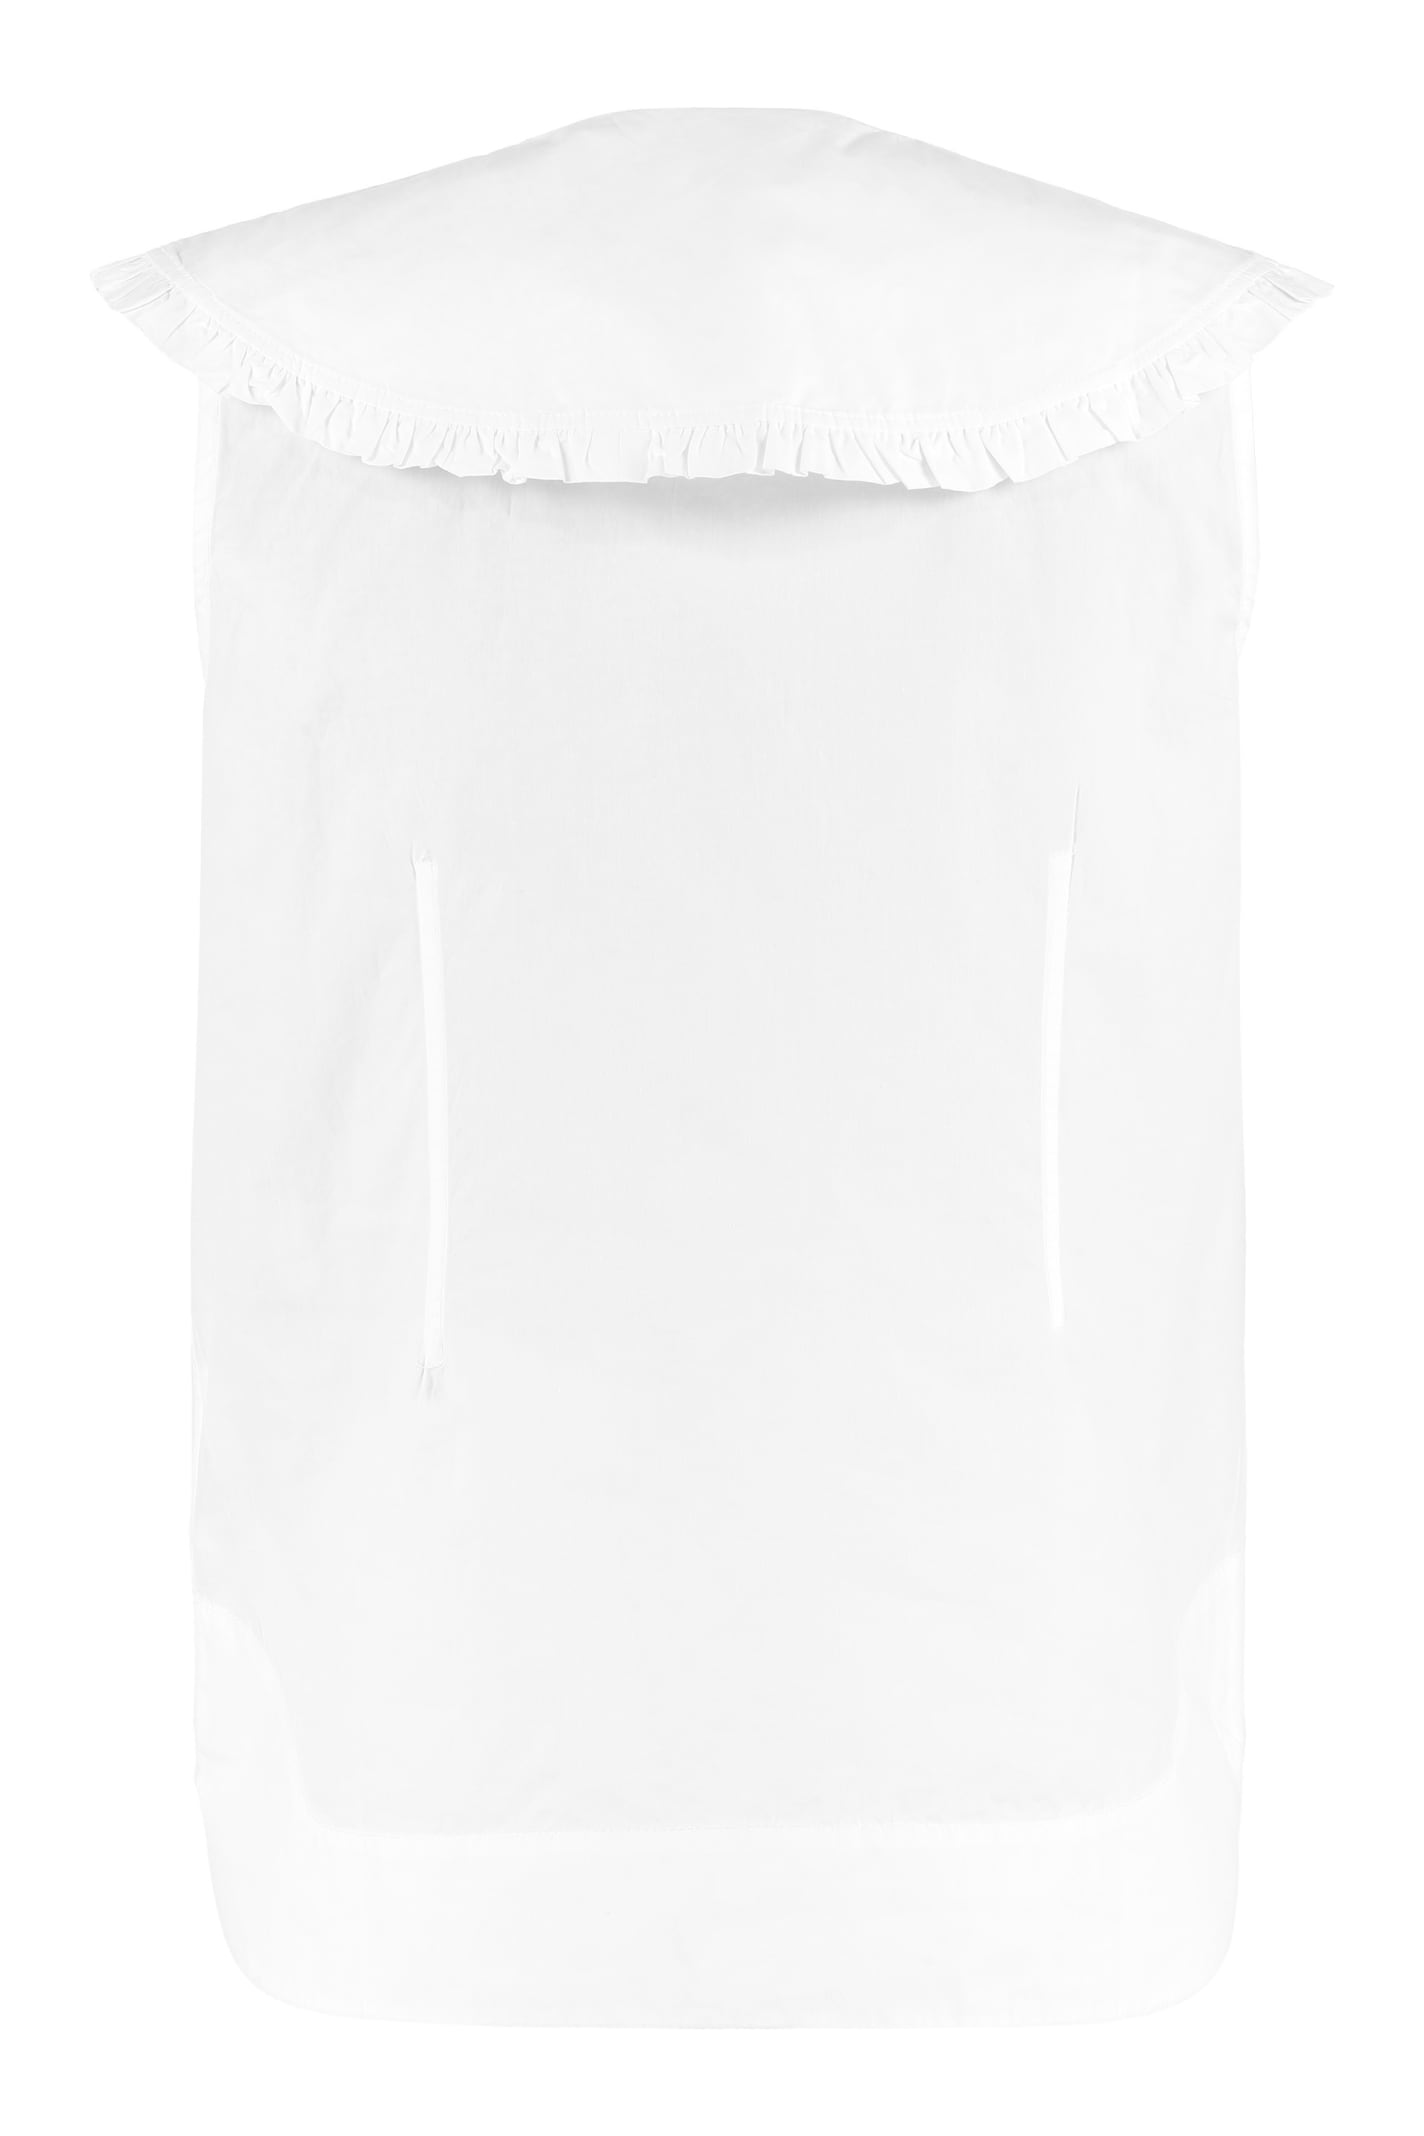 Shop Ganni Maxi Collar Cotton Shirt In White